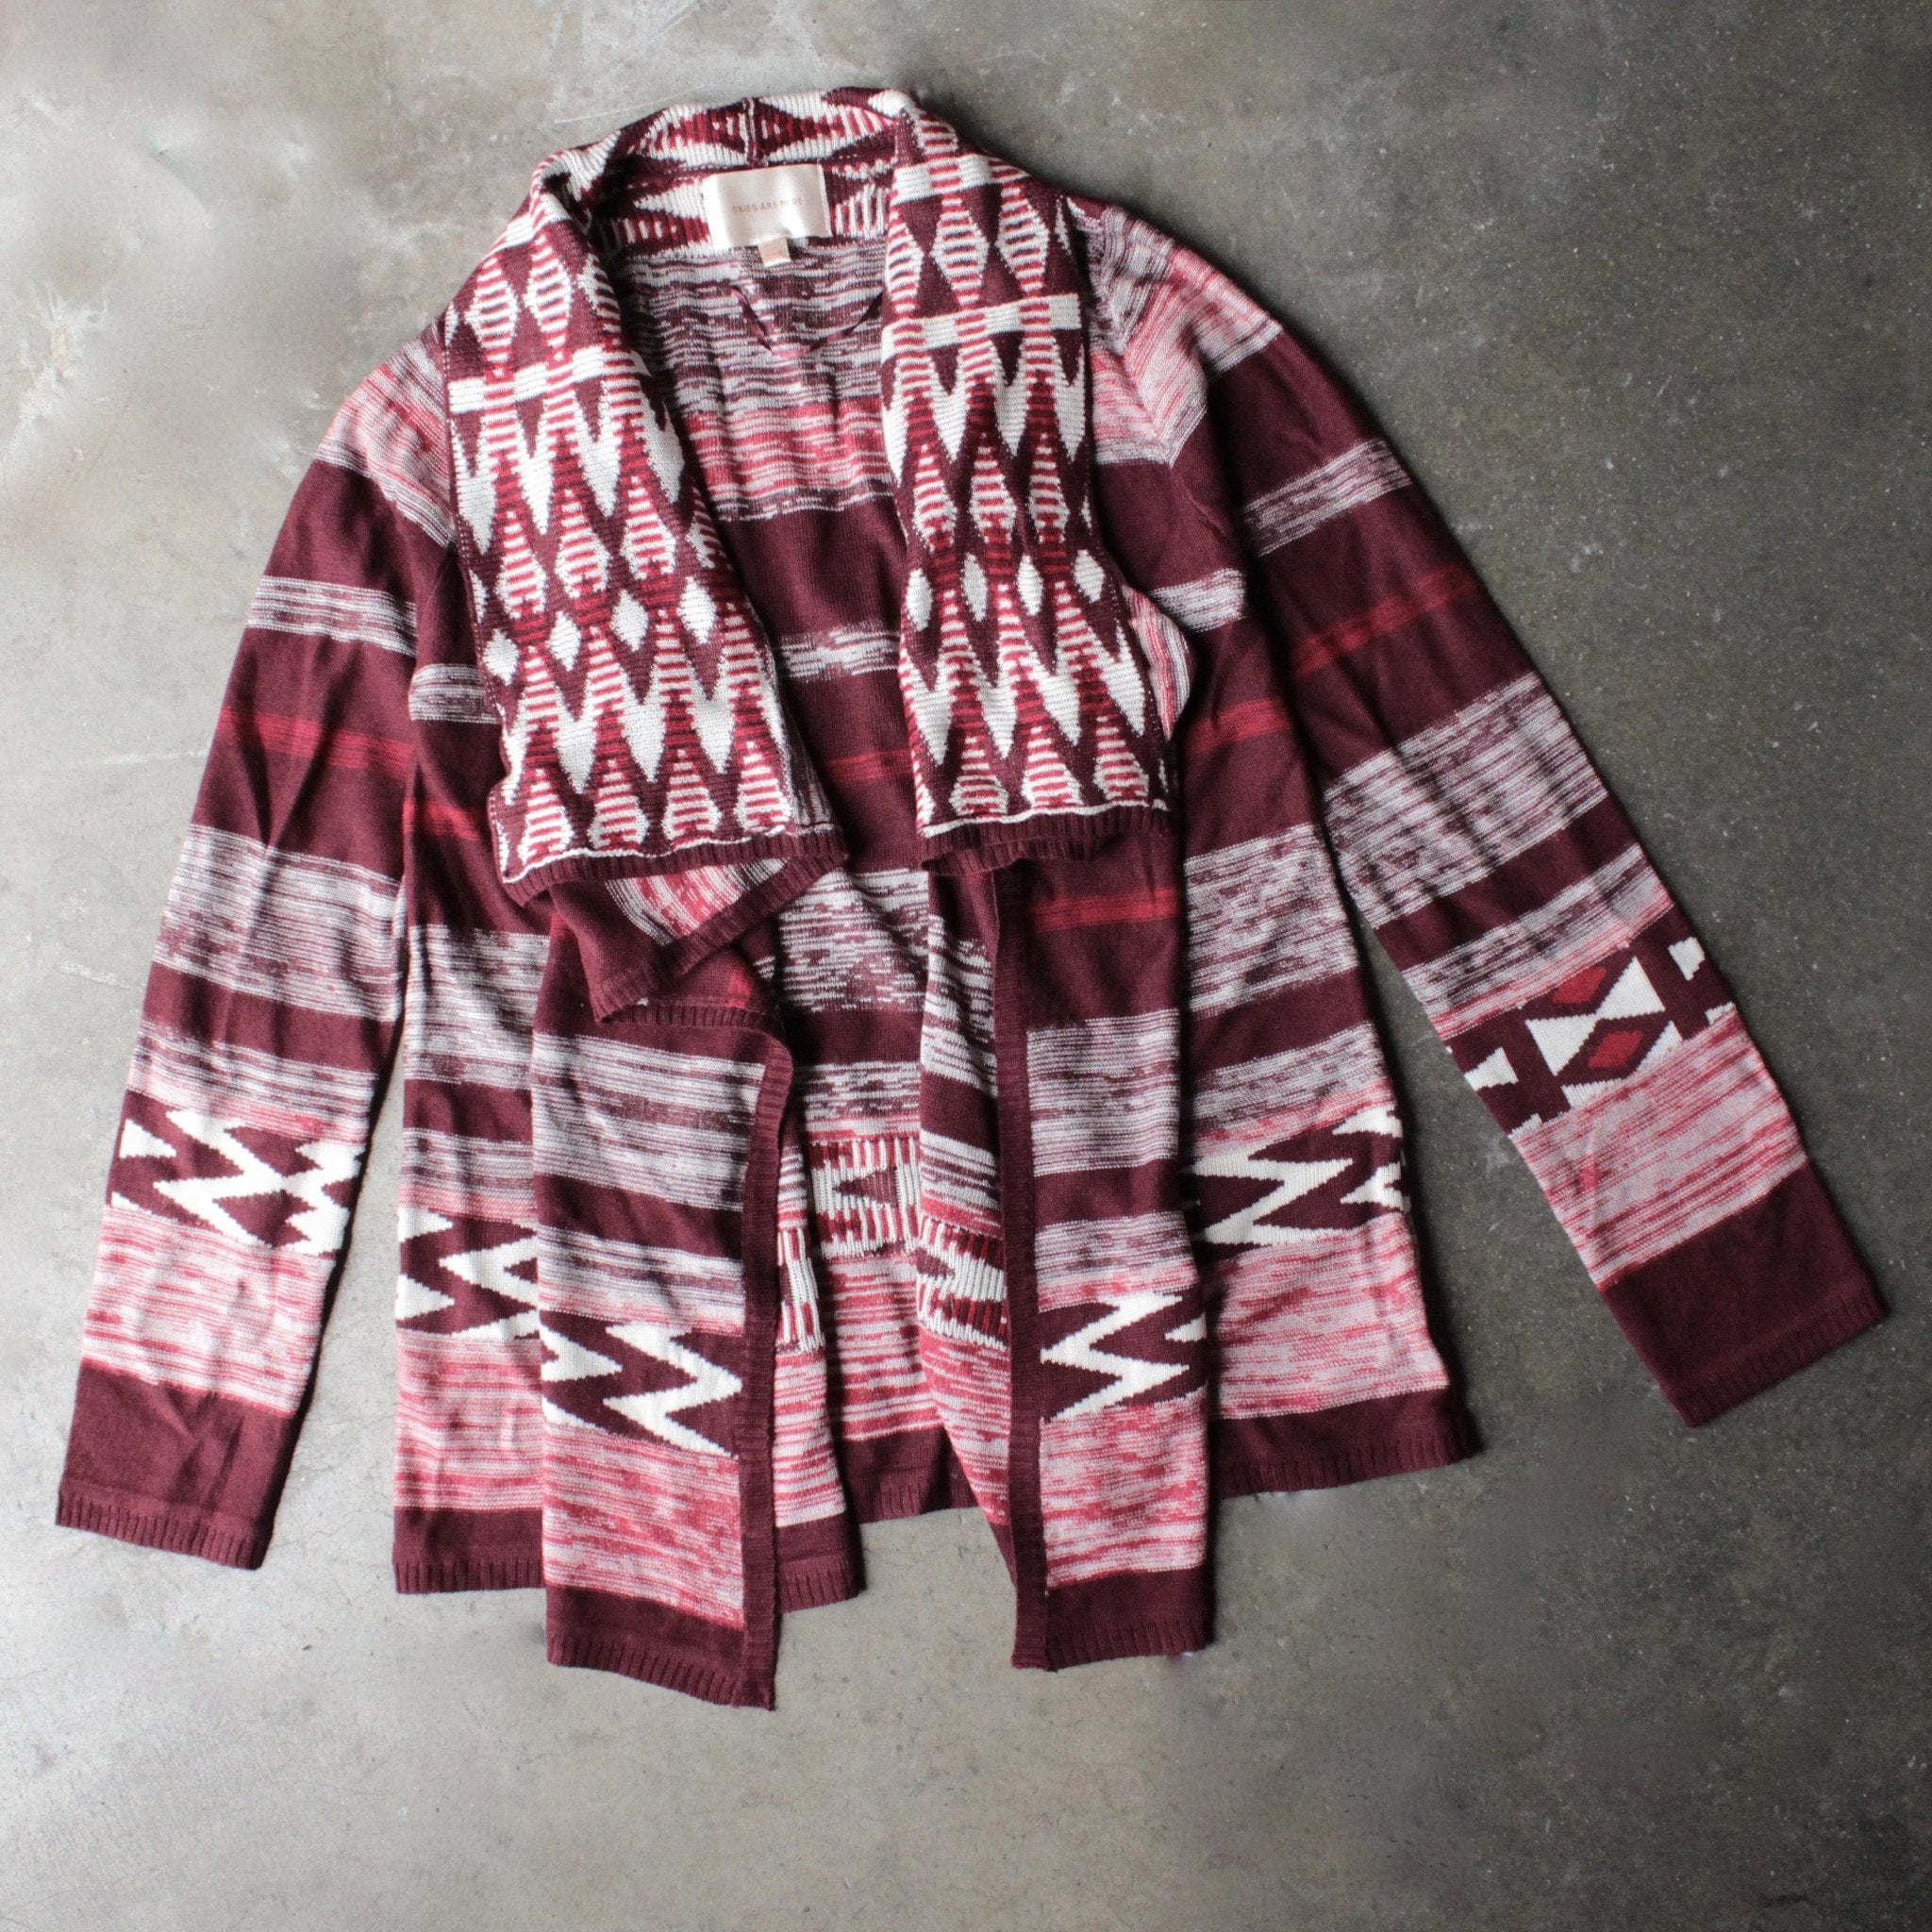 Aztec Wrap Cardigan Sweater